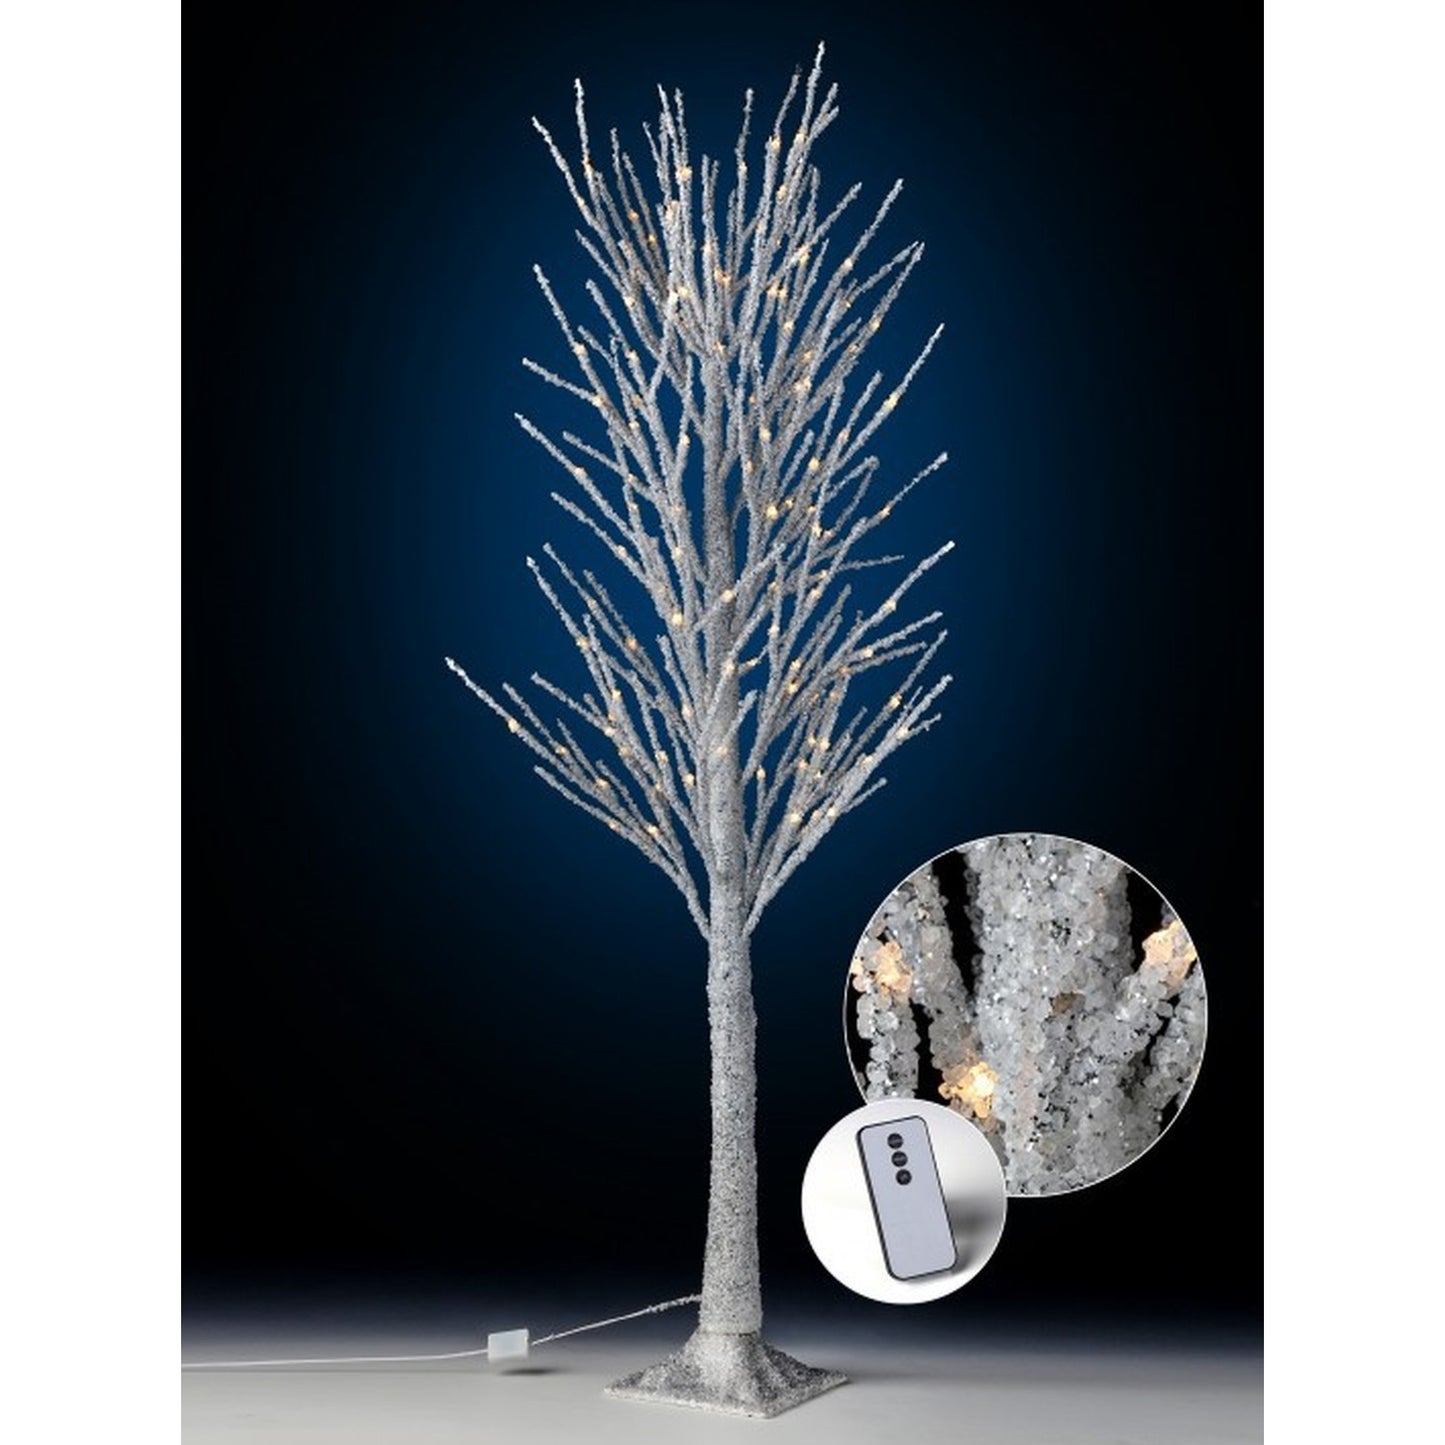 Regency International Metallic Led Tmr Remote Winter Tree Btr/Plugin